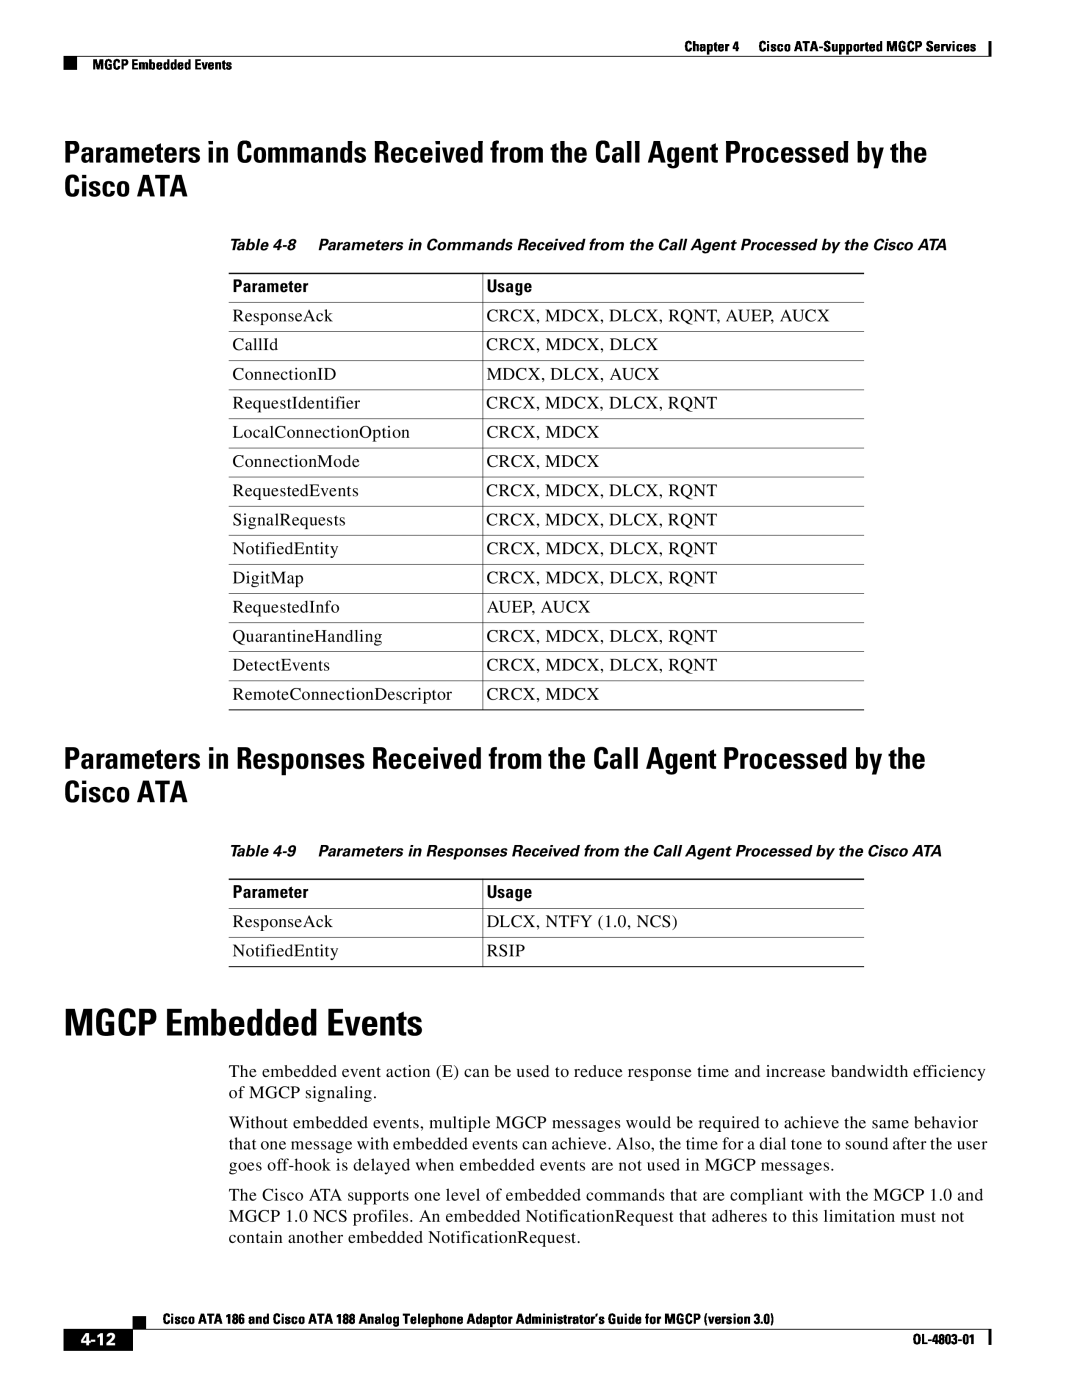 Cisco Systems ATA 186, ATA 188 manual MGCP Embedded Events 